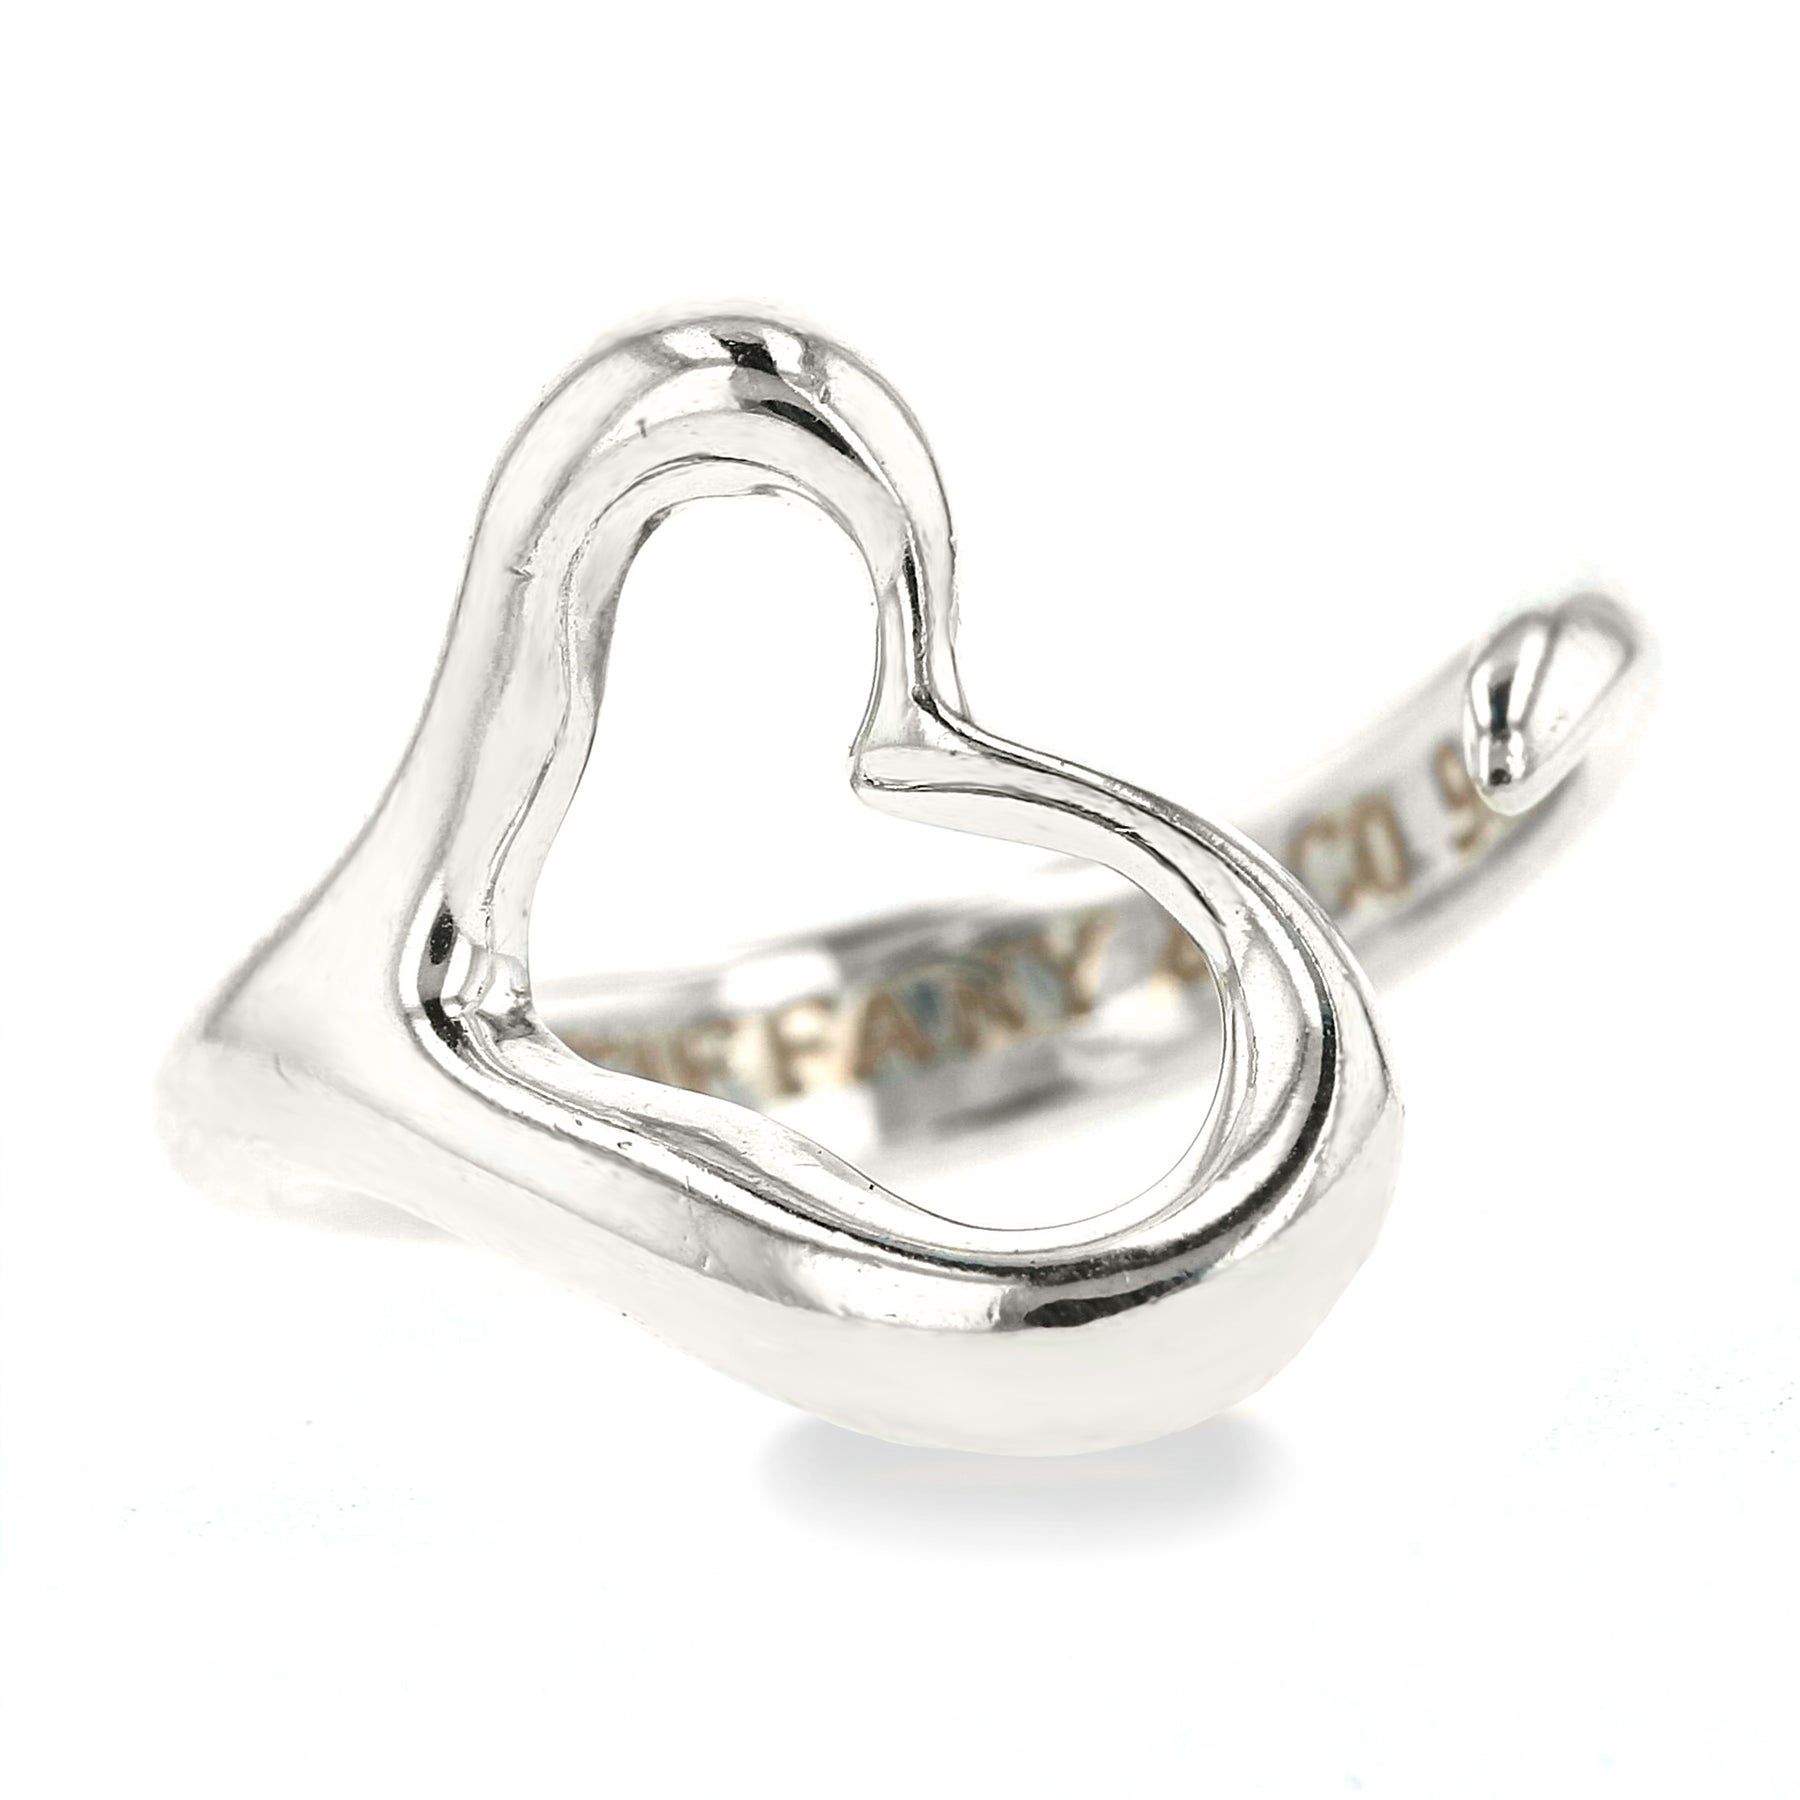 Tiffany's Elsa Peretti Open Heart Sterling Silver Ring